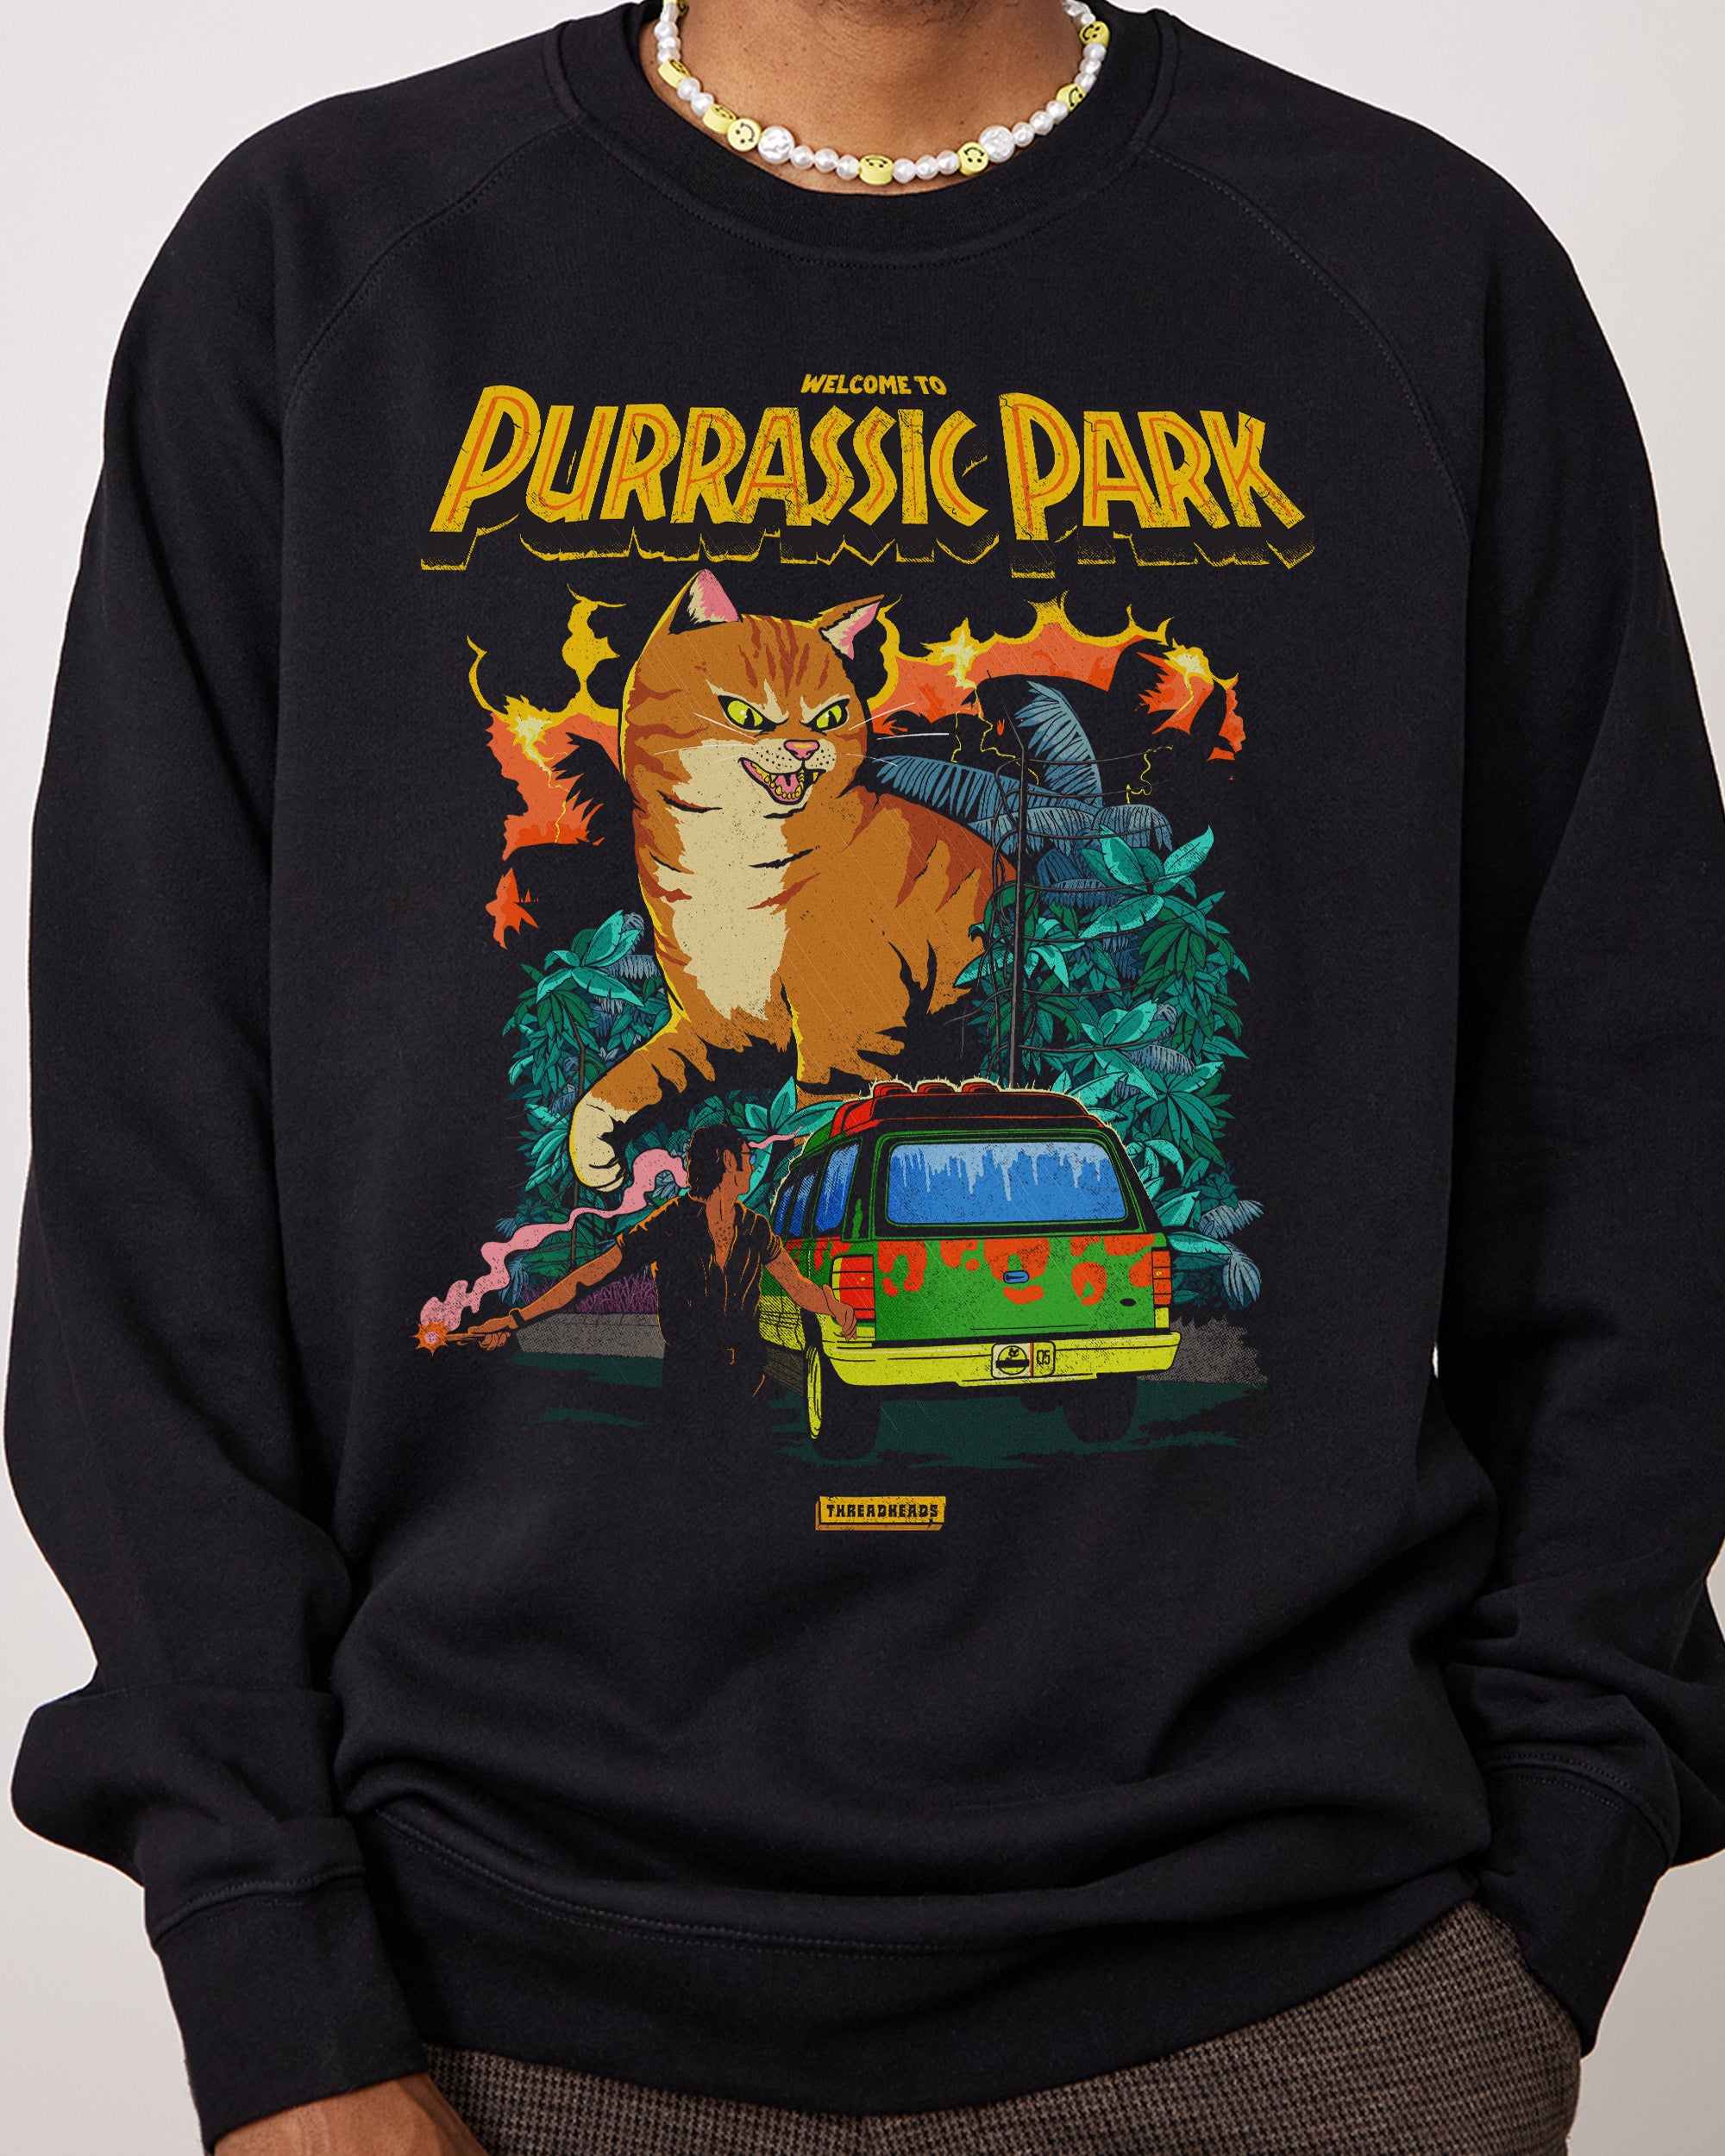 Purrassic Park Sweater Australia Online